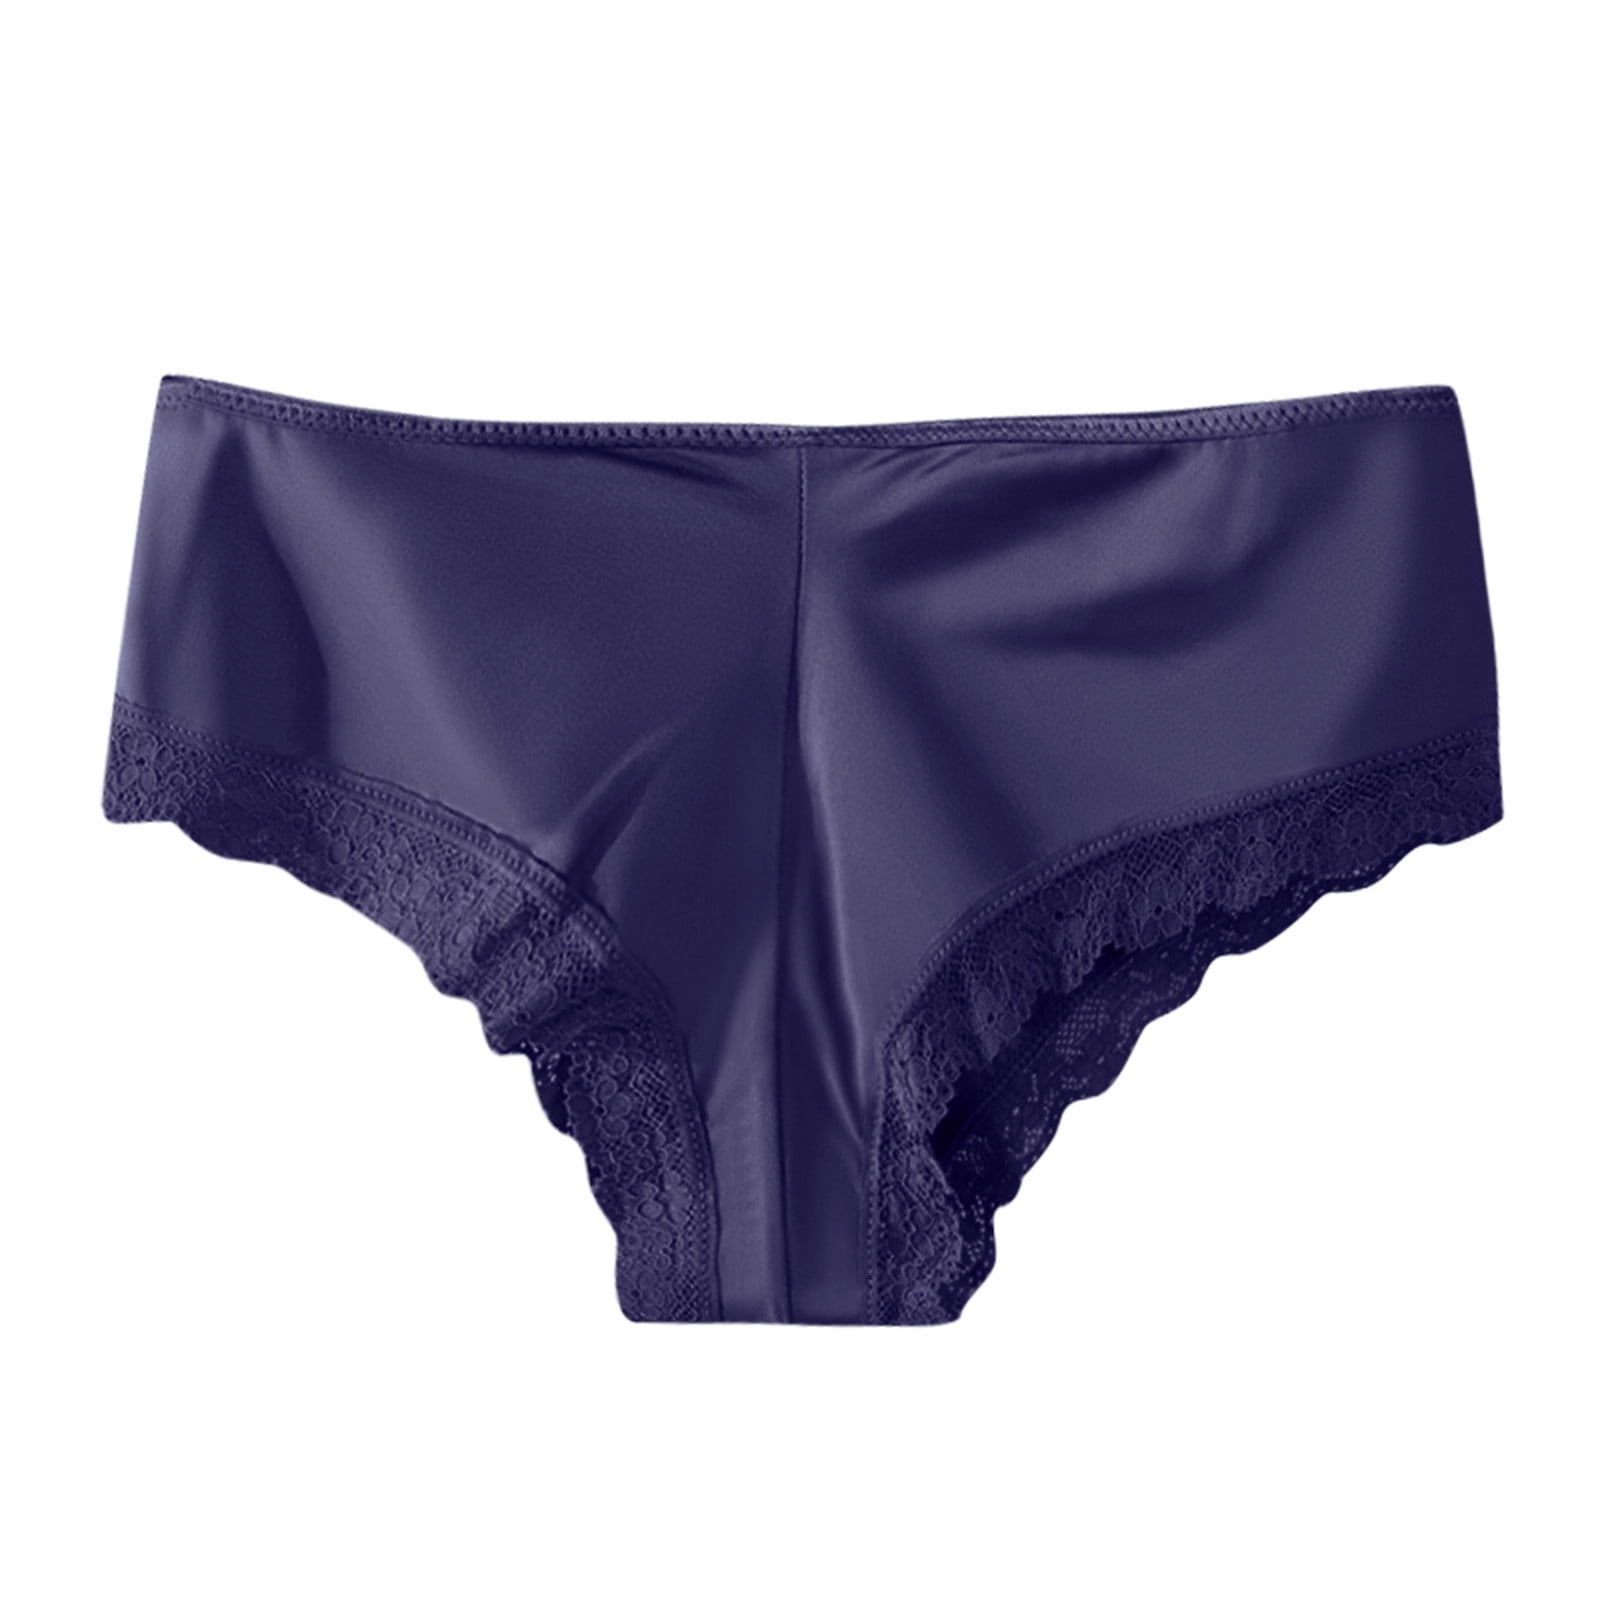 CLZOUD Plus Size Cheeky Brief Purple Lace Womens Underwear Cotton